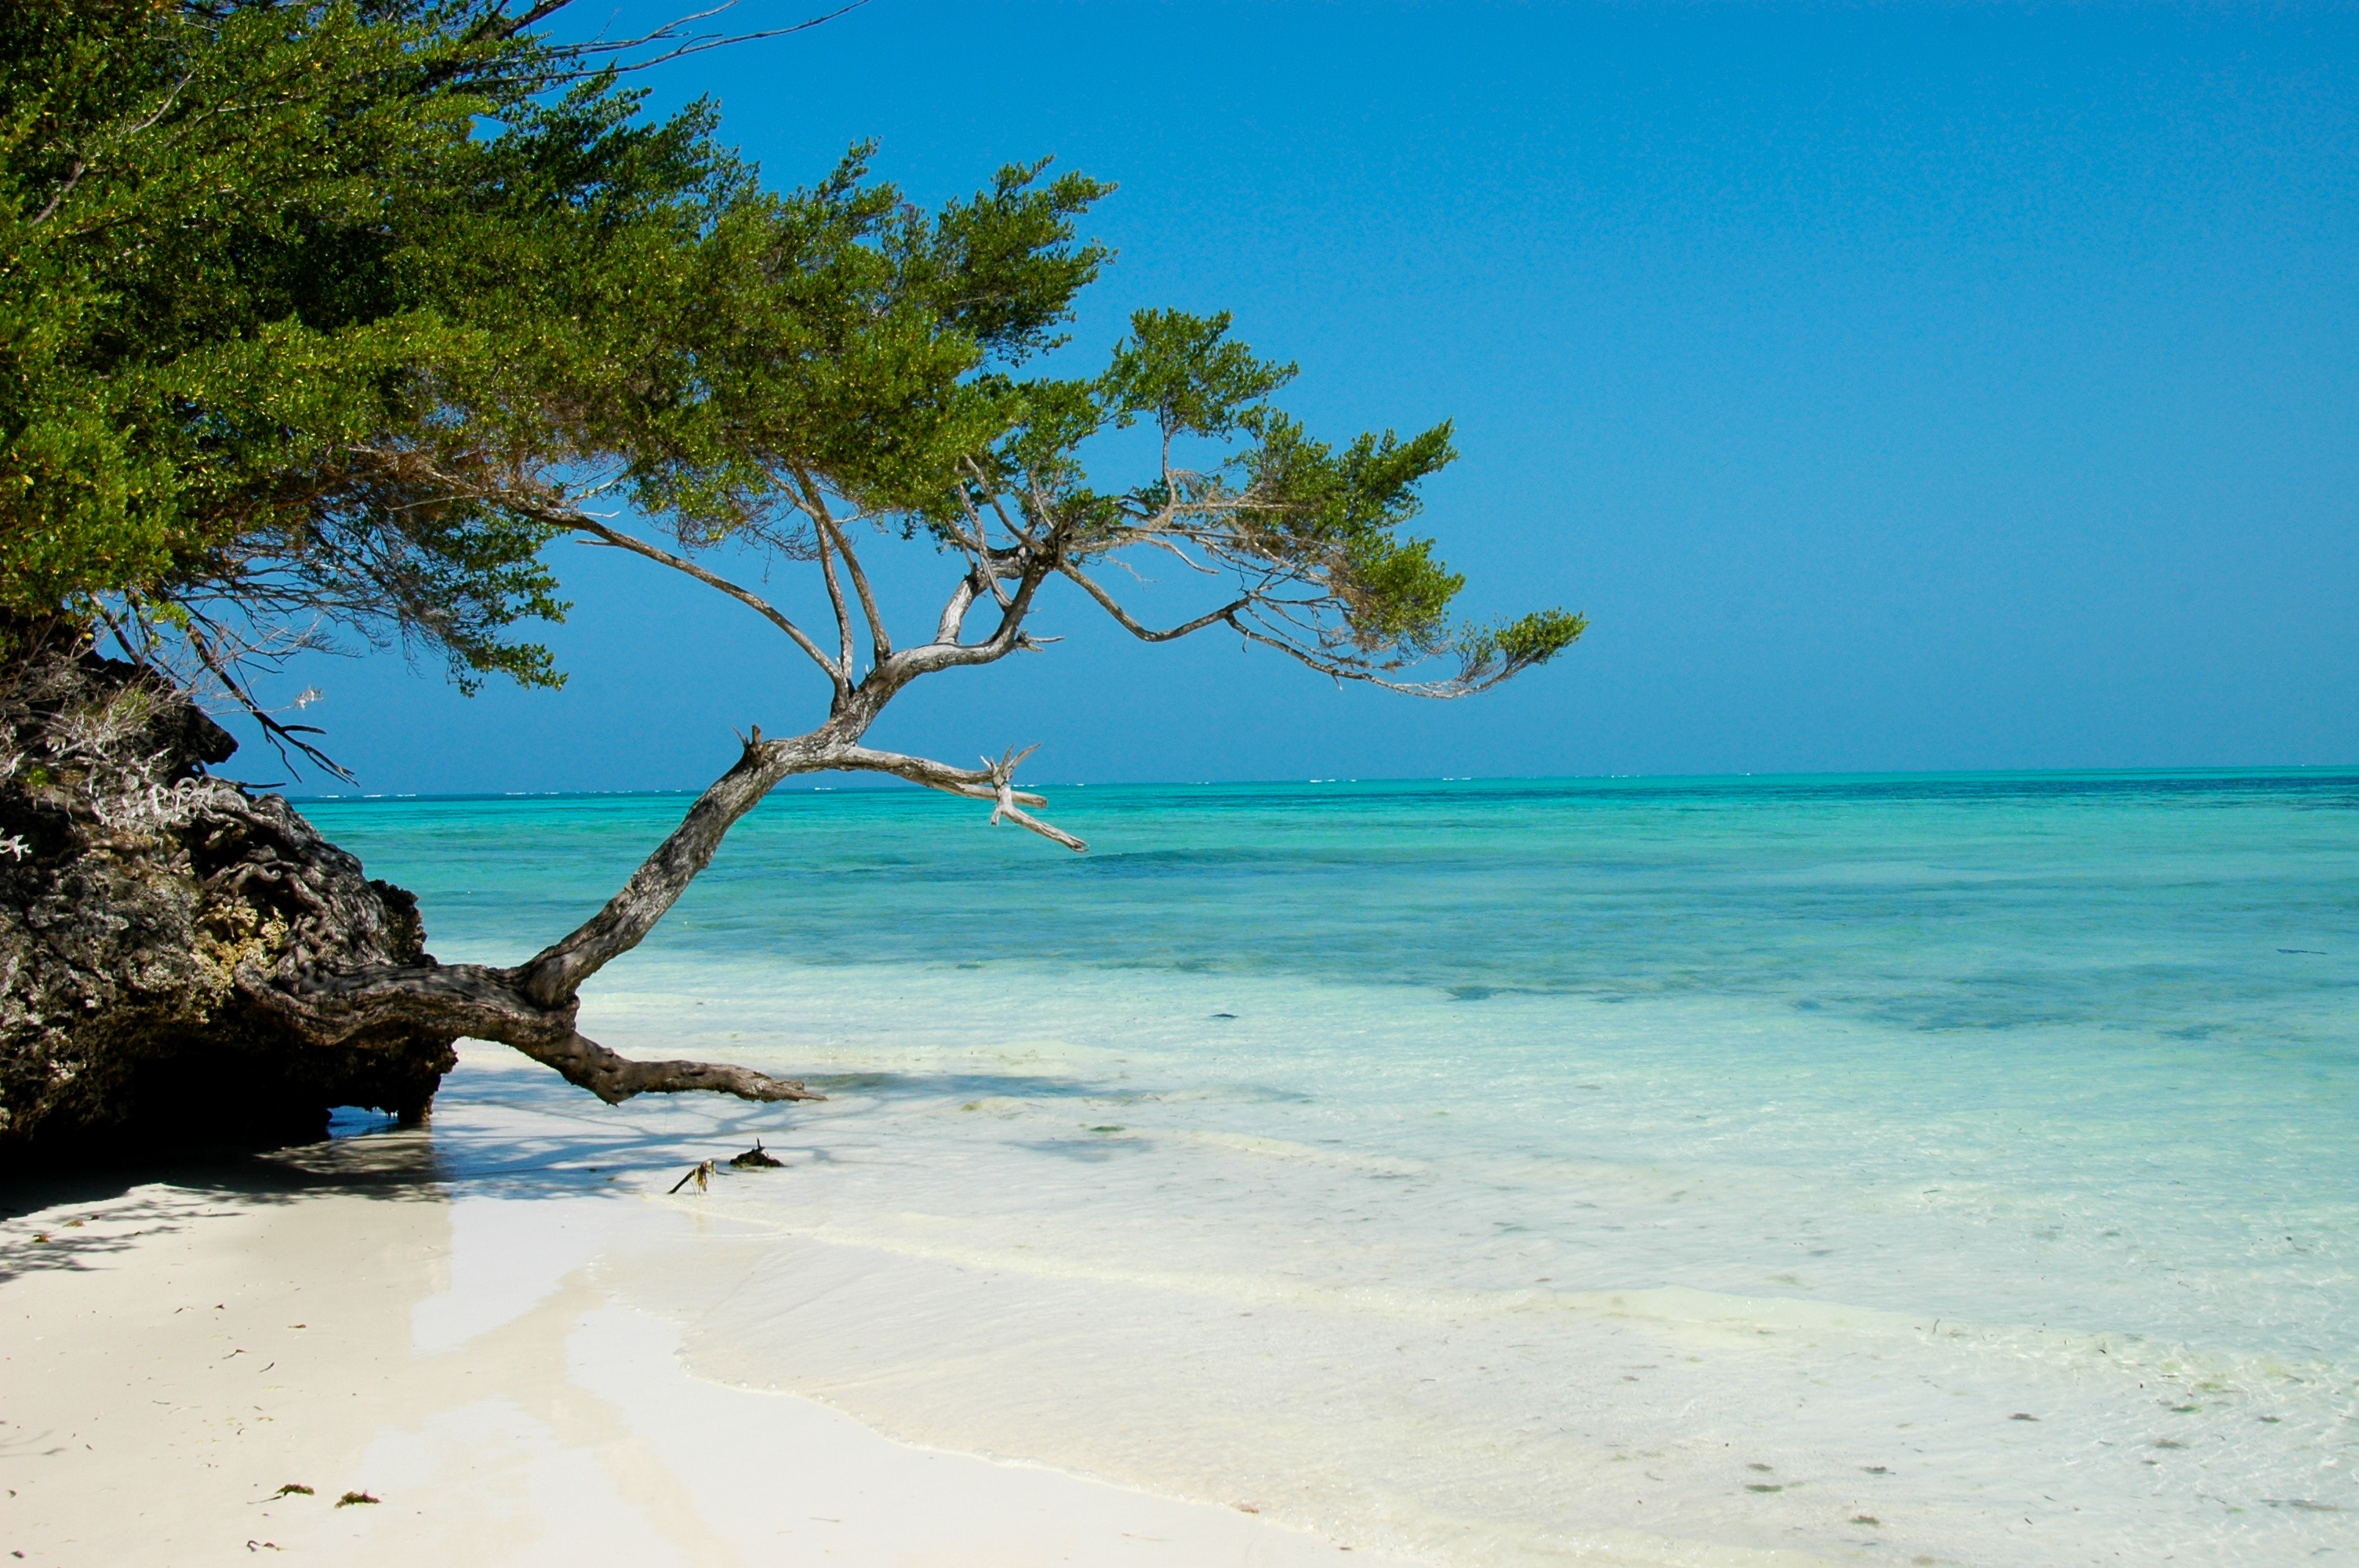 Pongwe Beach in Zanzibar, where ten men were arrested for being gay.